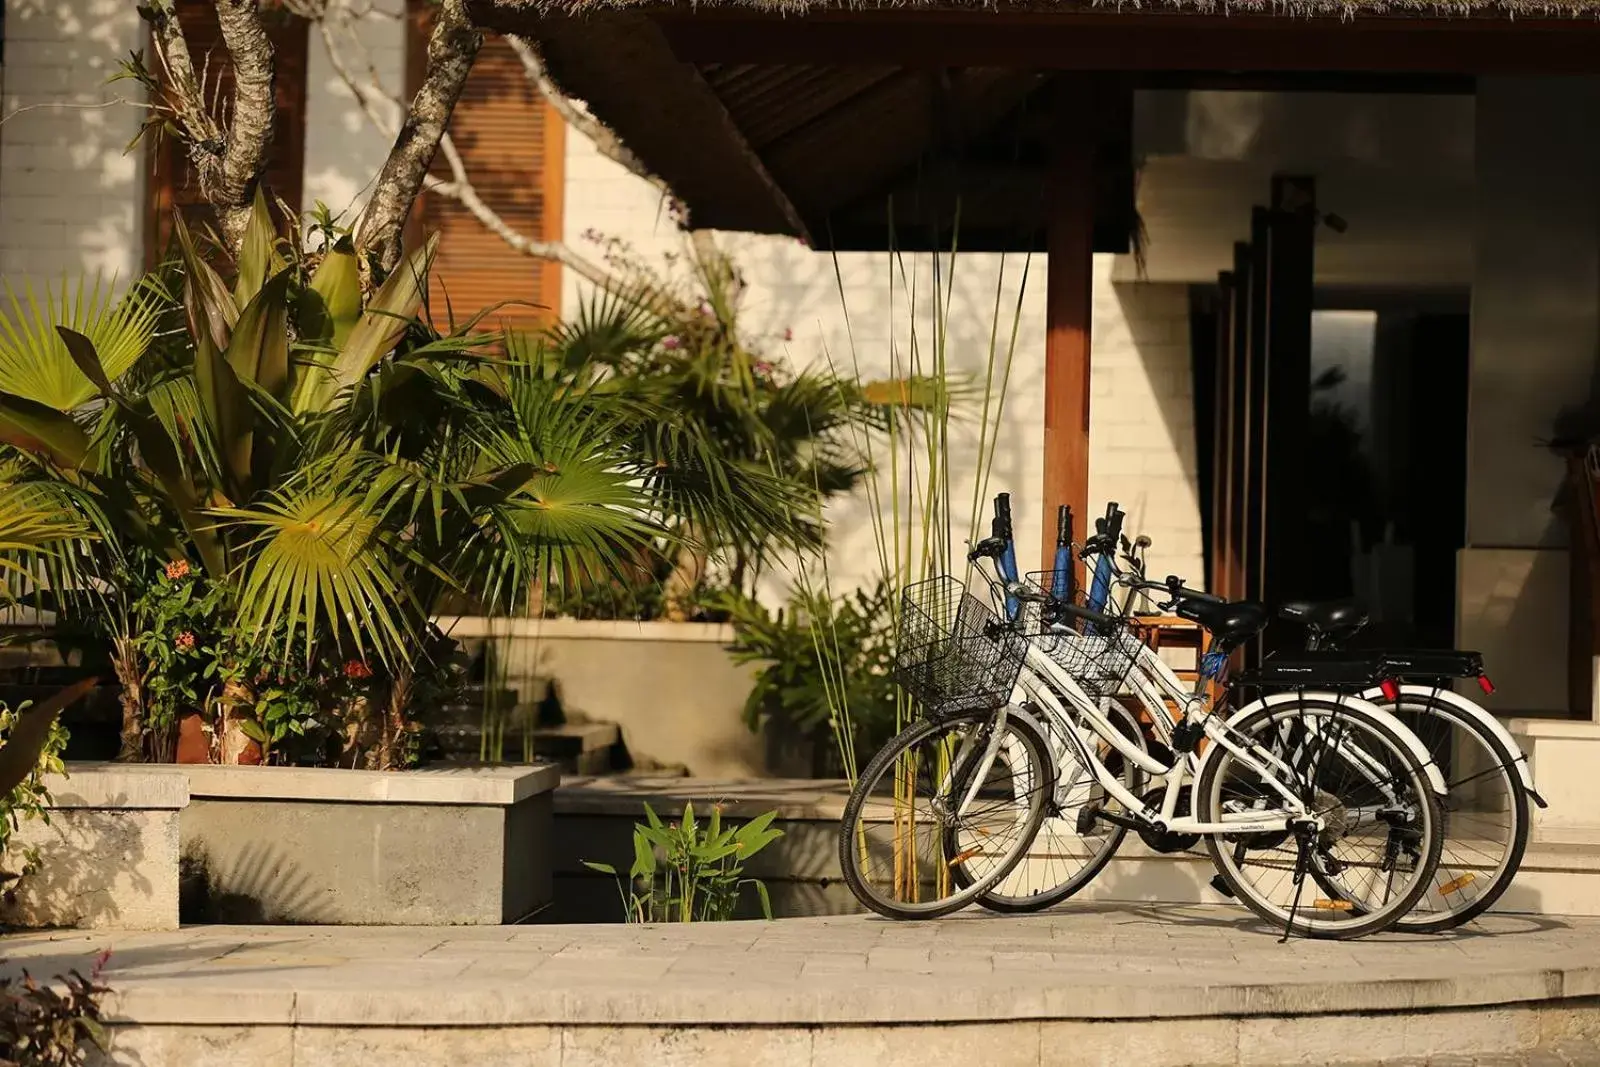 Facade/entrance in Sudamala Resort, Sanur, Bali